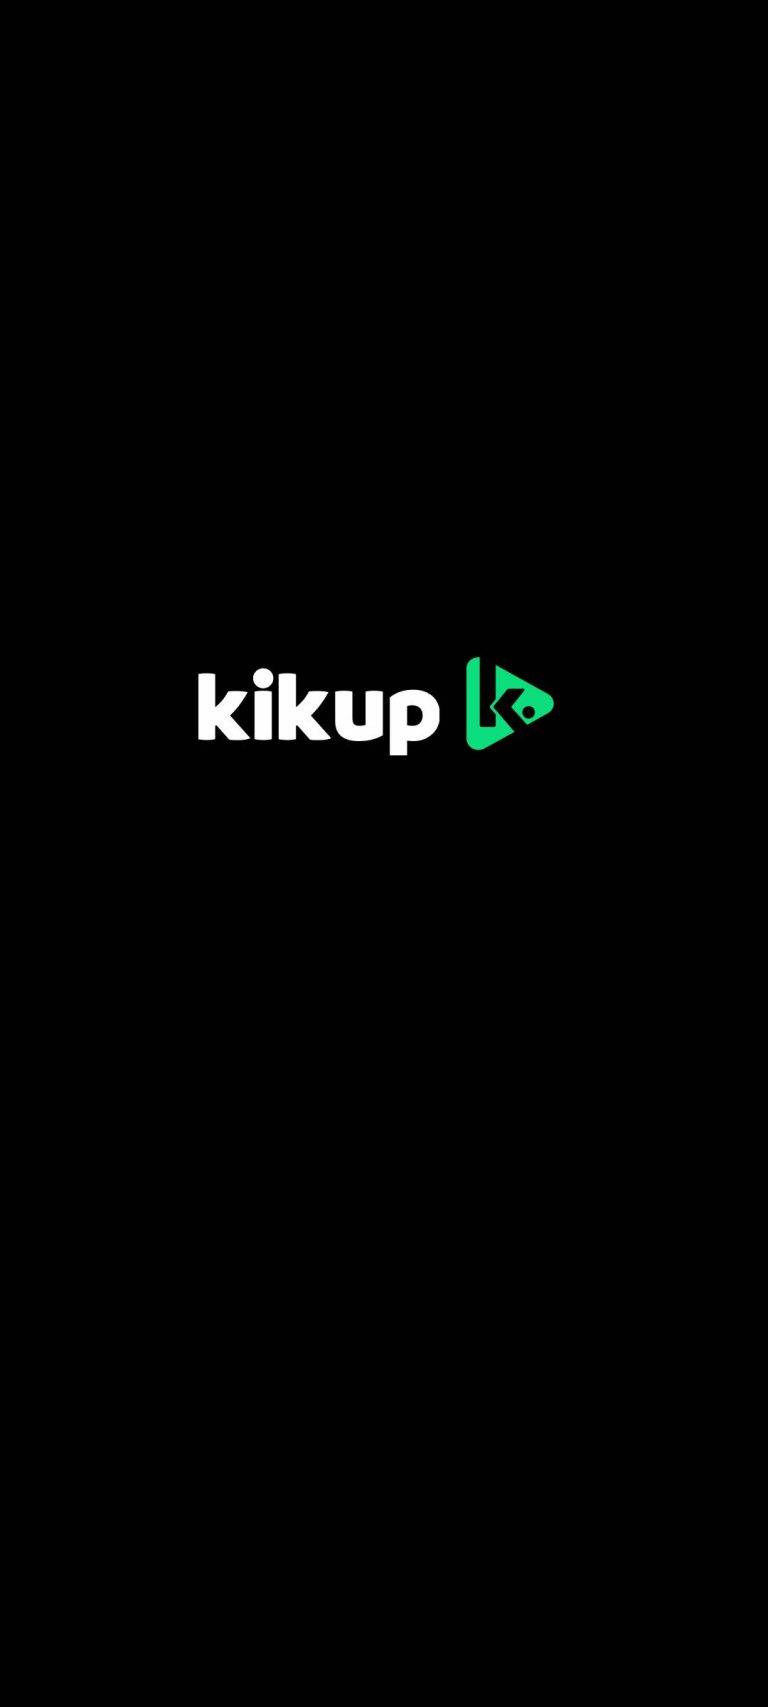 Kikup: Application mobile